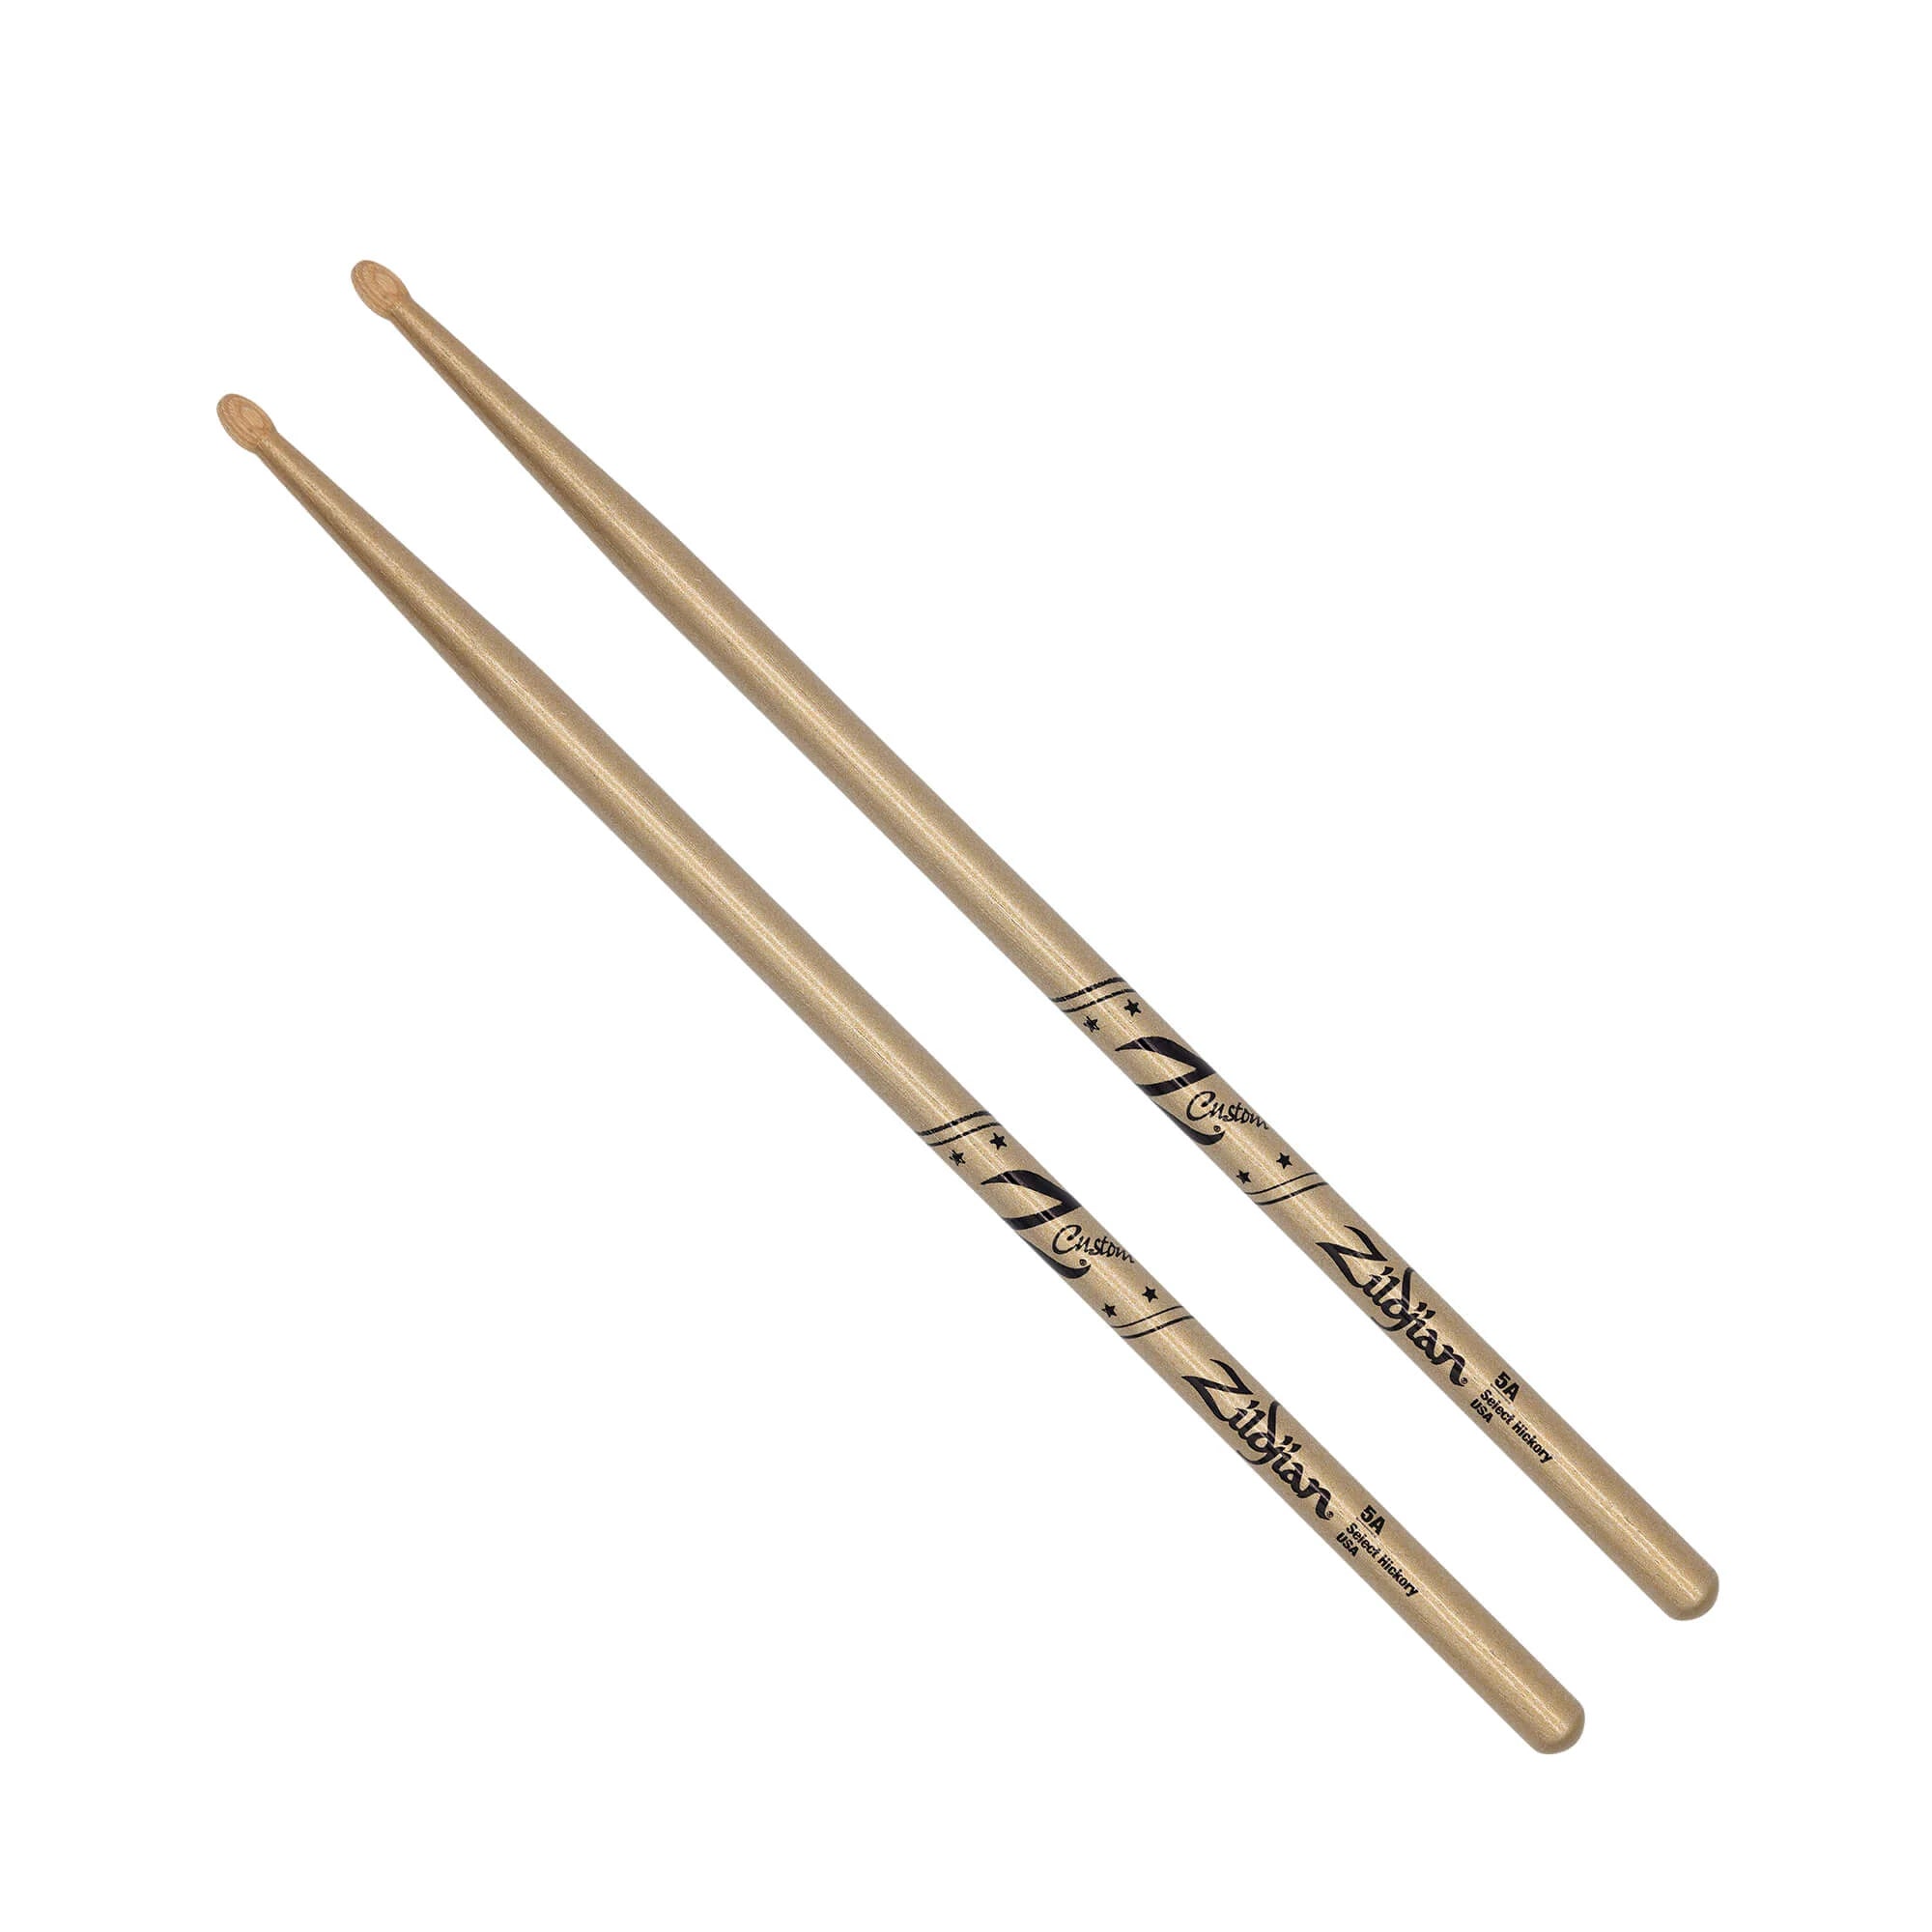 Zildjian Z Custom LE Drumstick Collection 5A Gold Chroma, Wood Tip (Z5ACG-ZC) DRUM STICKS Zildjian 